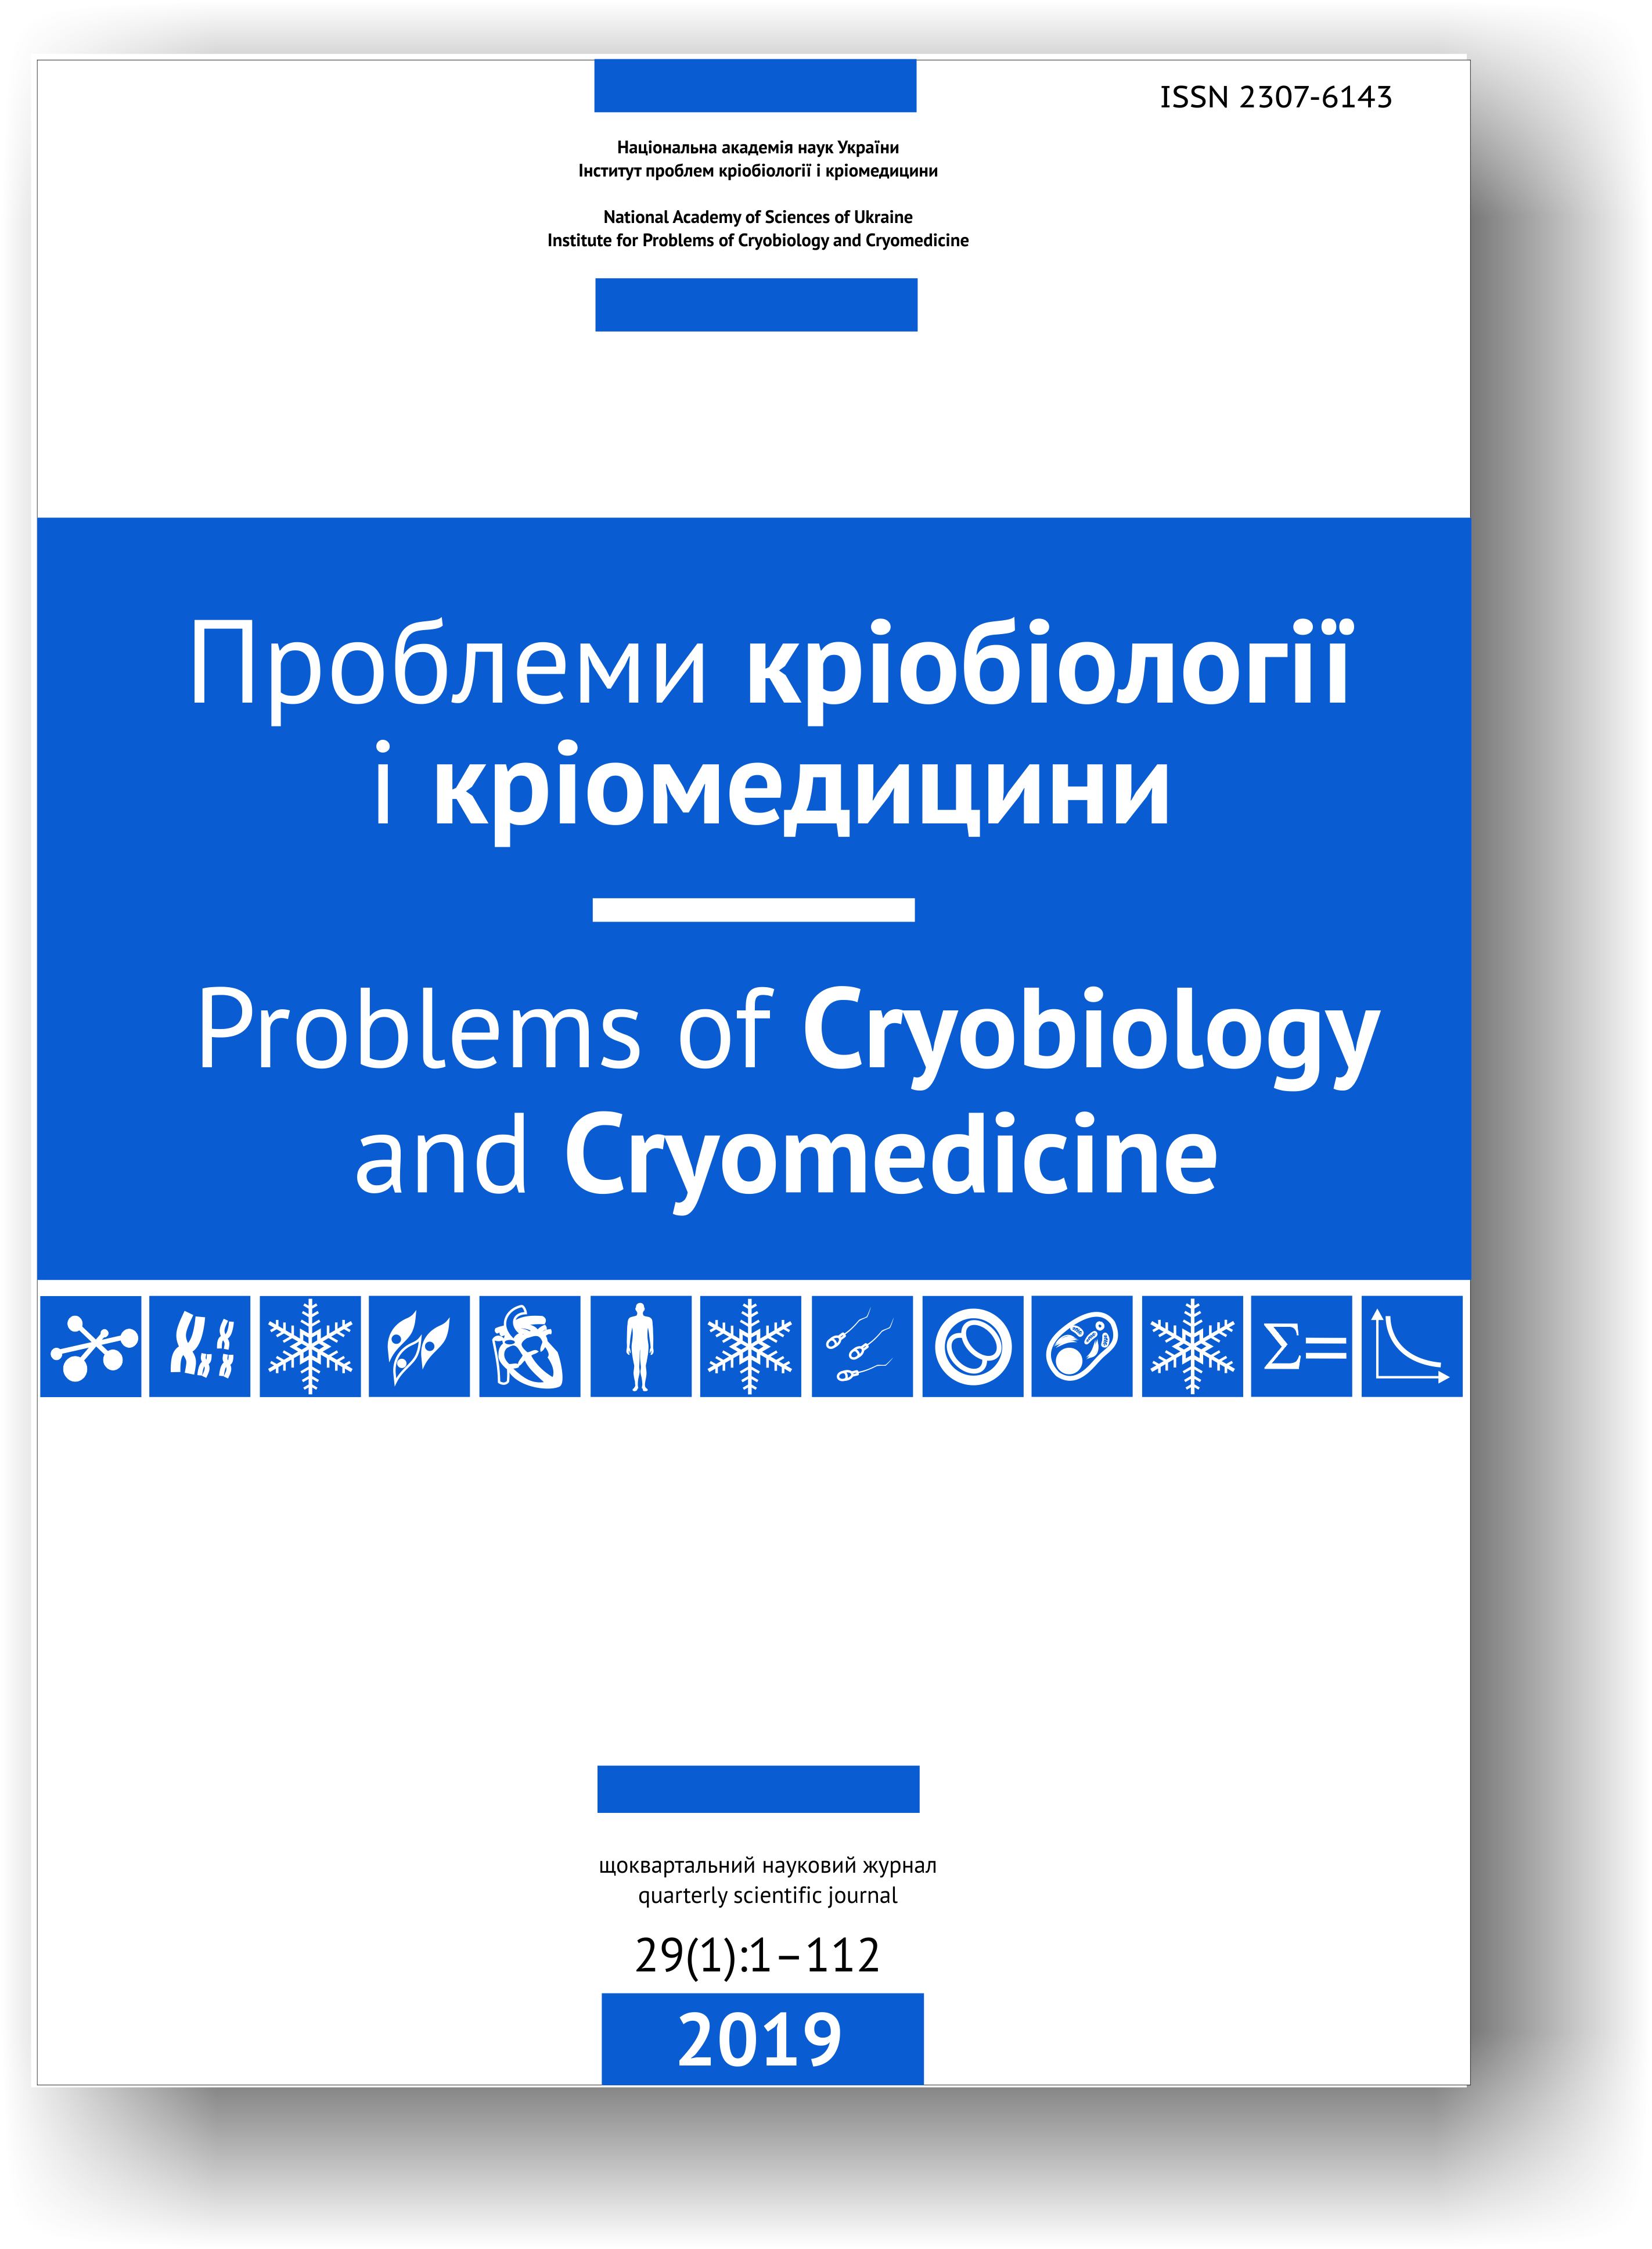 					View Vol. 29 No. 1 (2019): Probl Cryobiol Cryomed
				